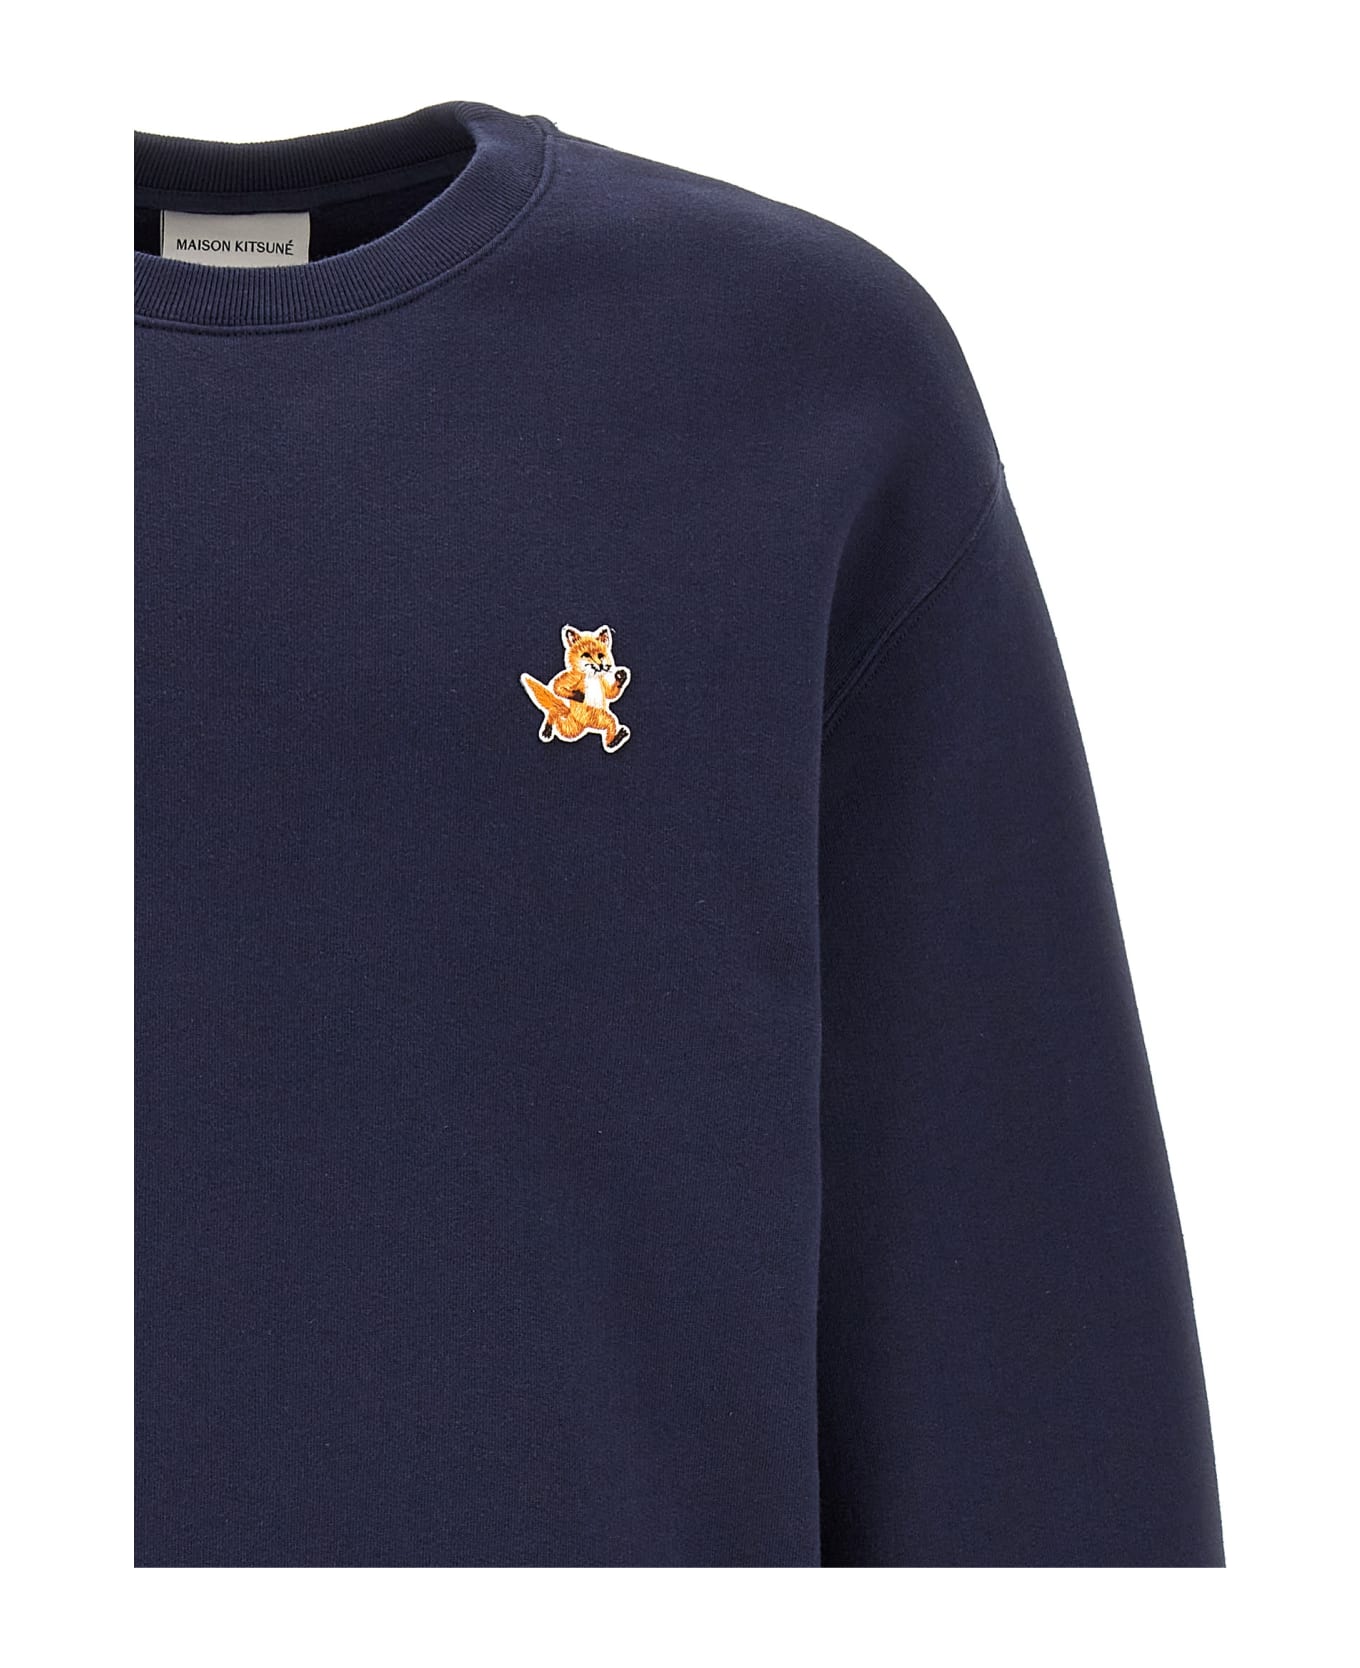 Maison Kitsuné 'speedy Fox Patch' Sweatshirt - Blue